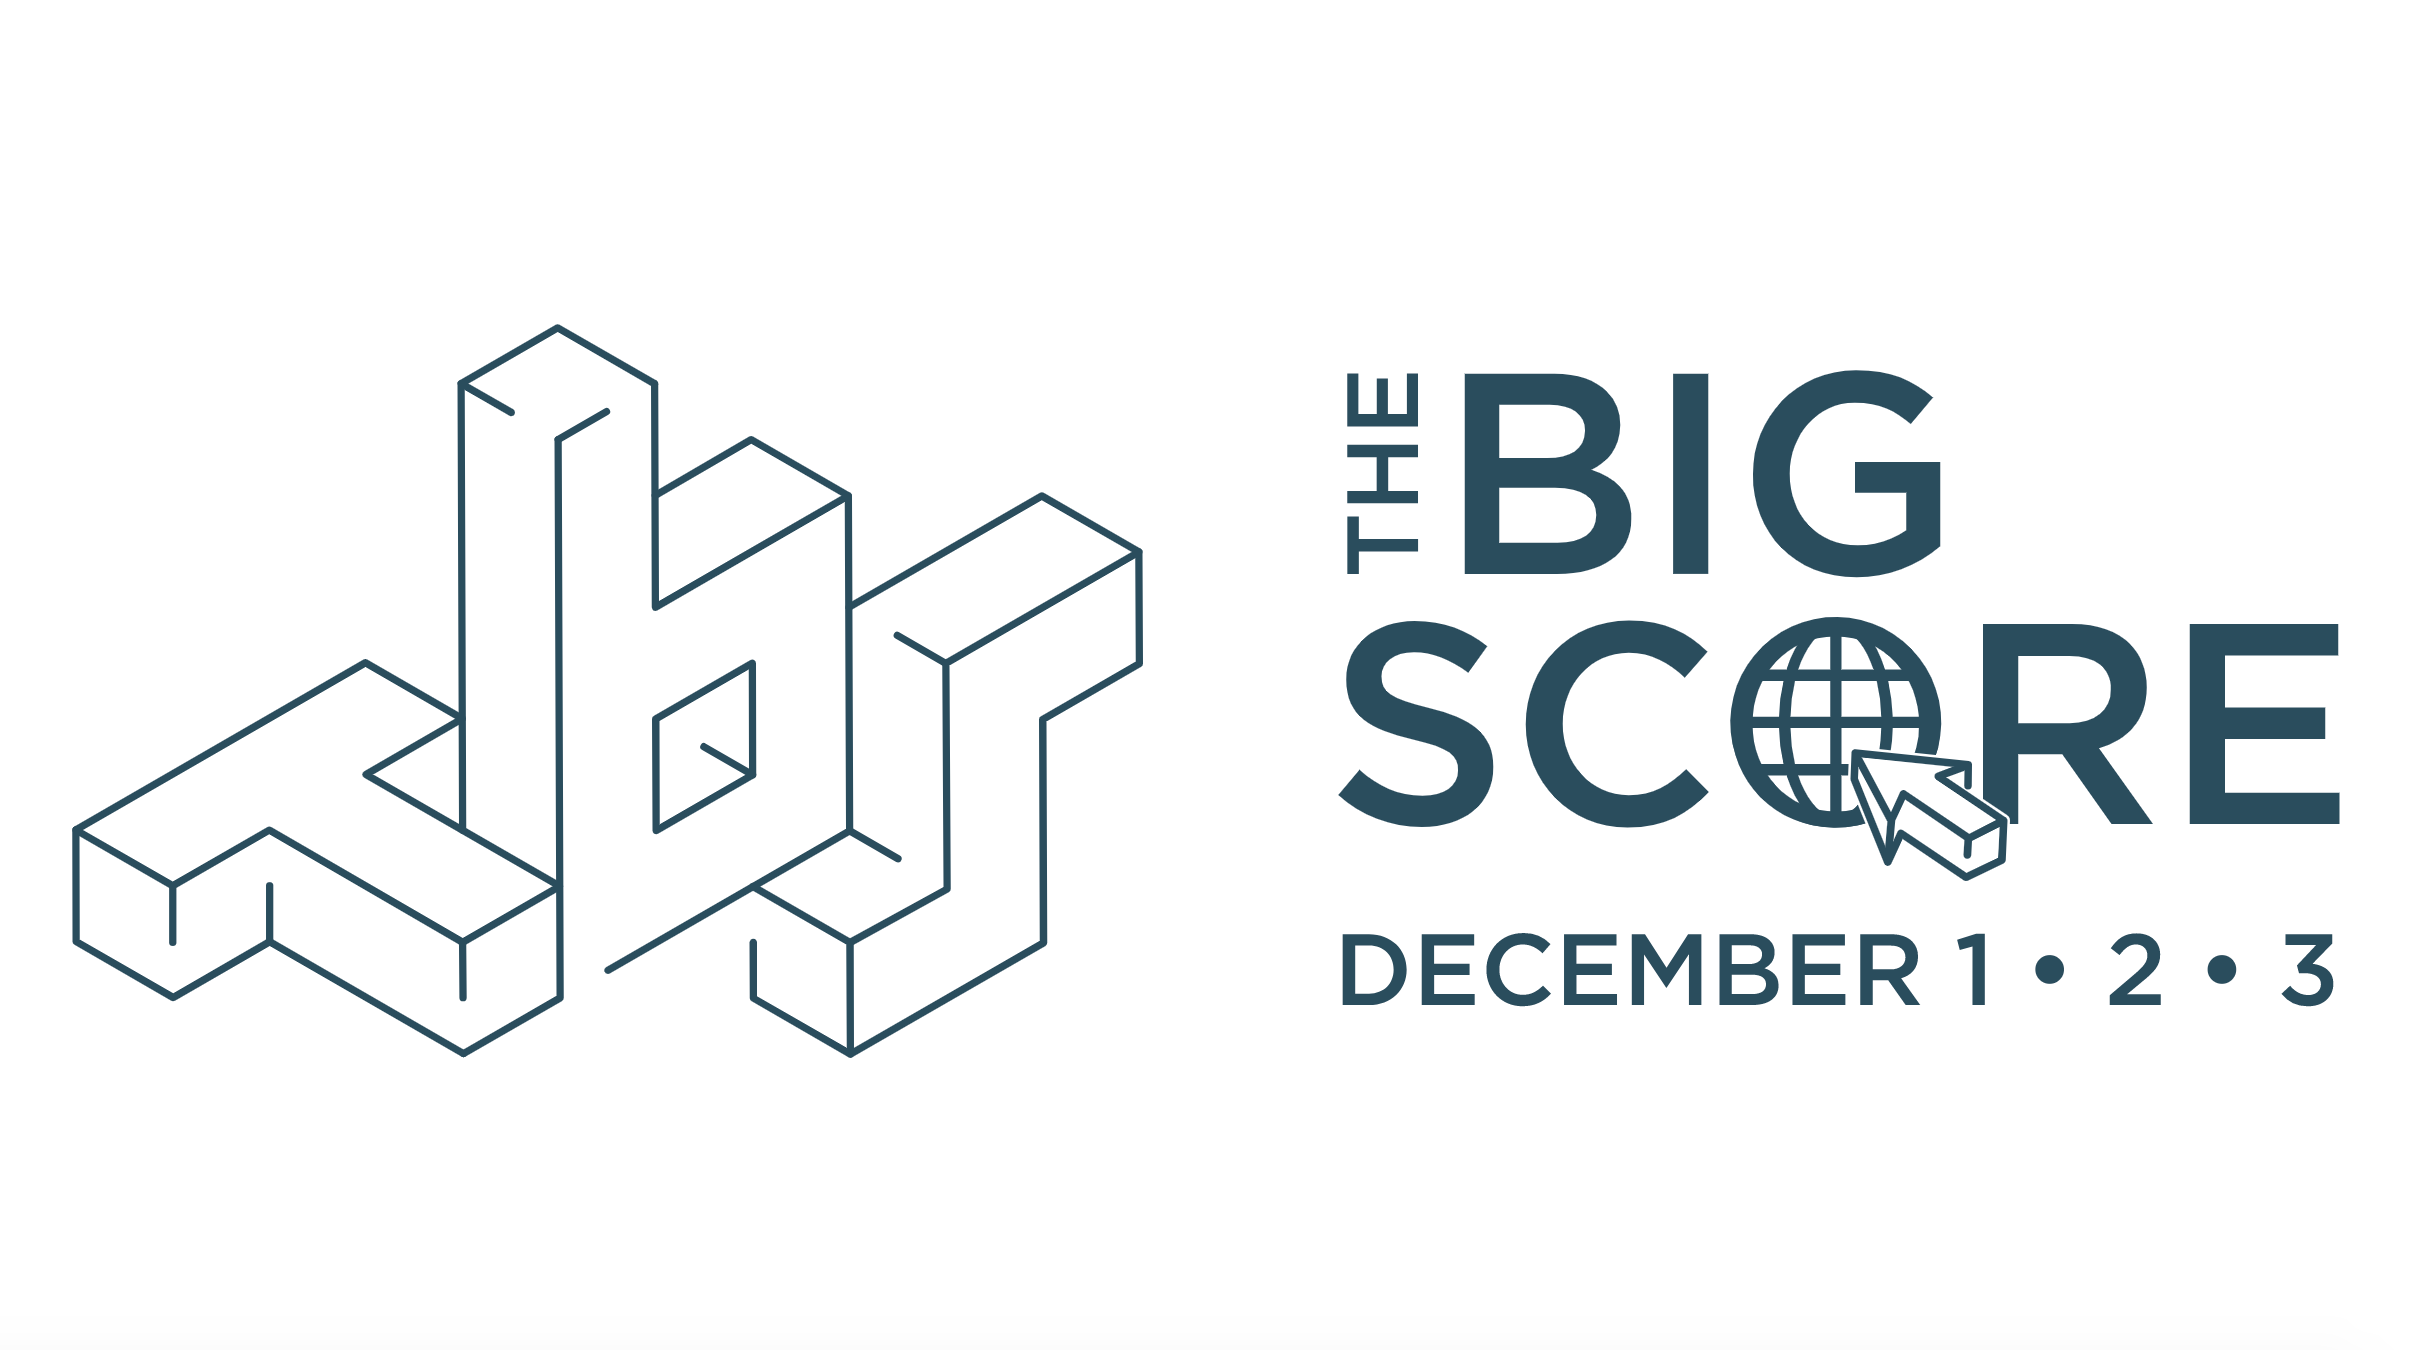 The Big Score's logo